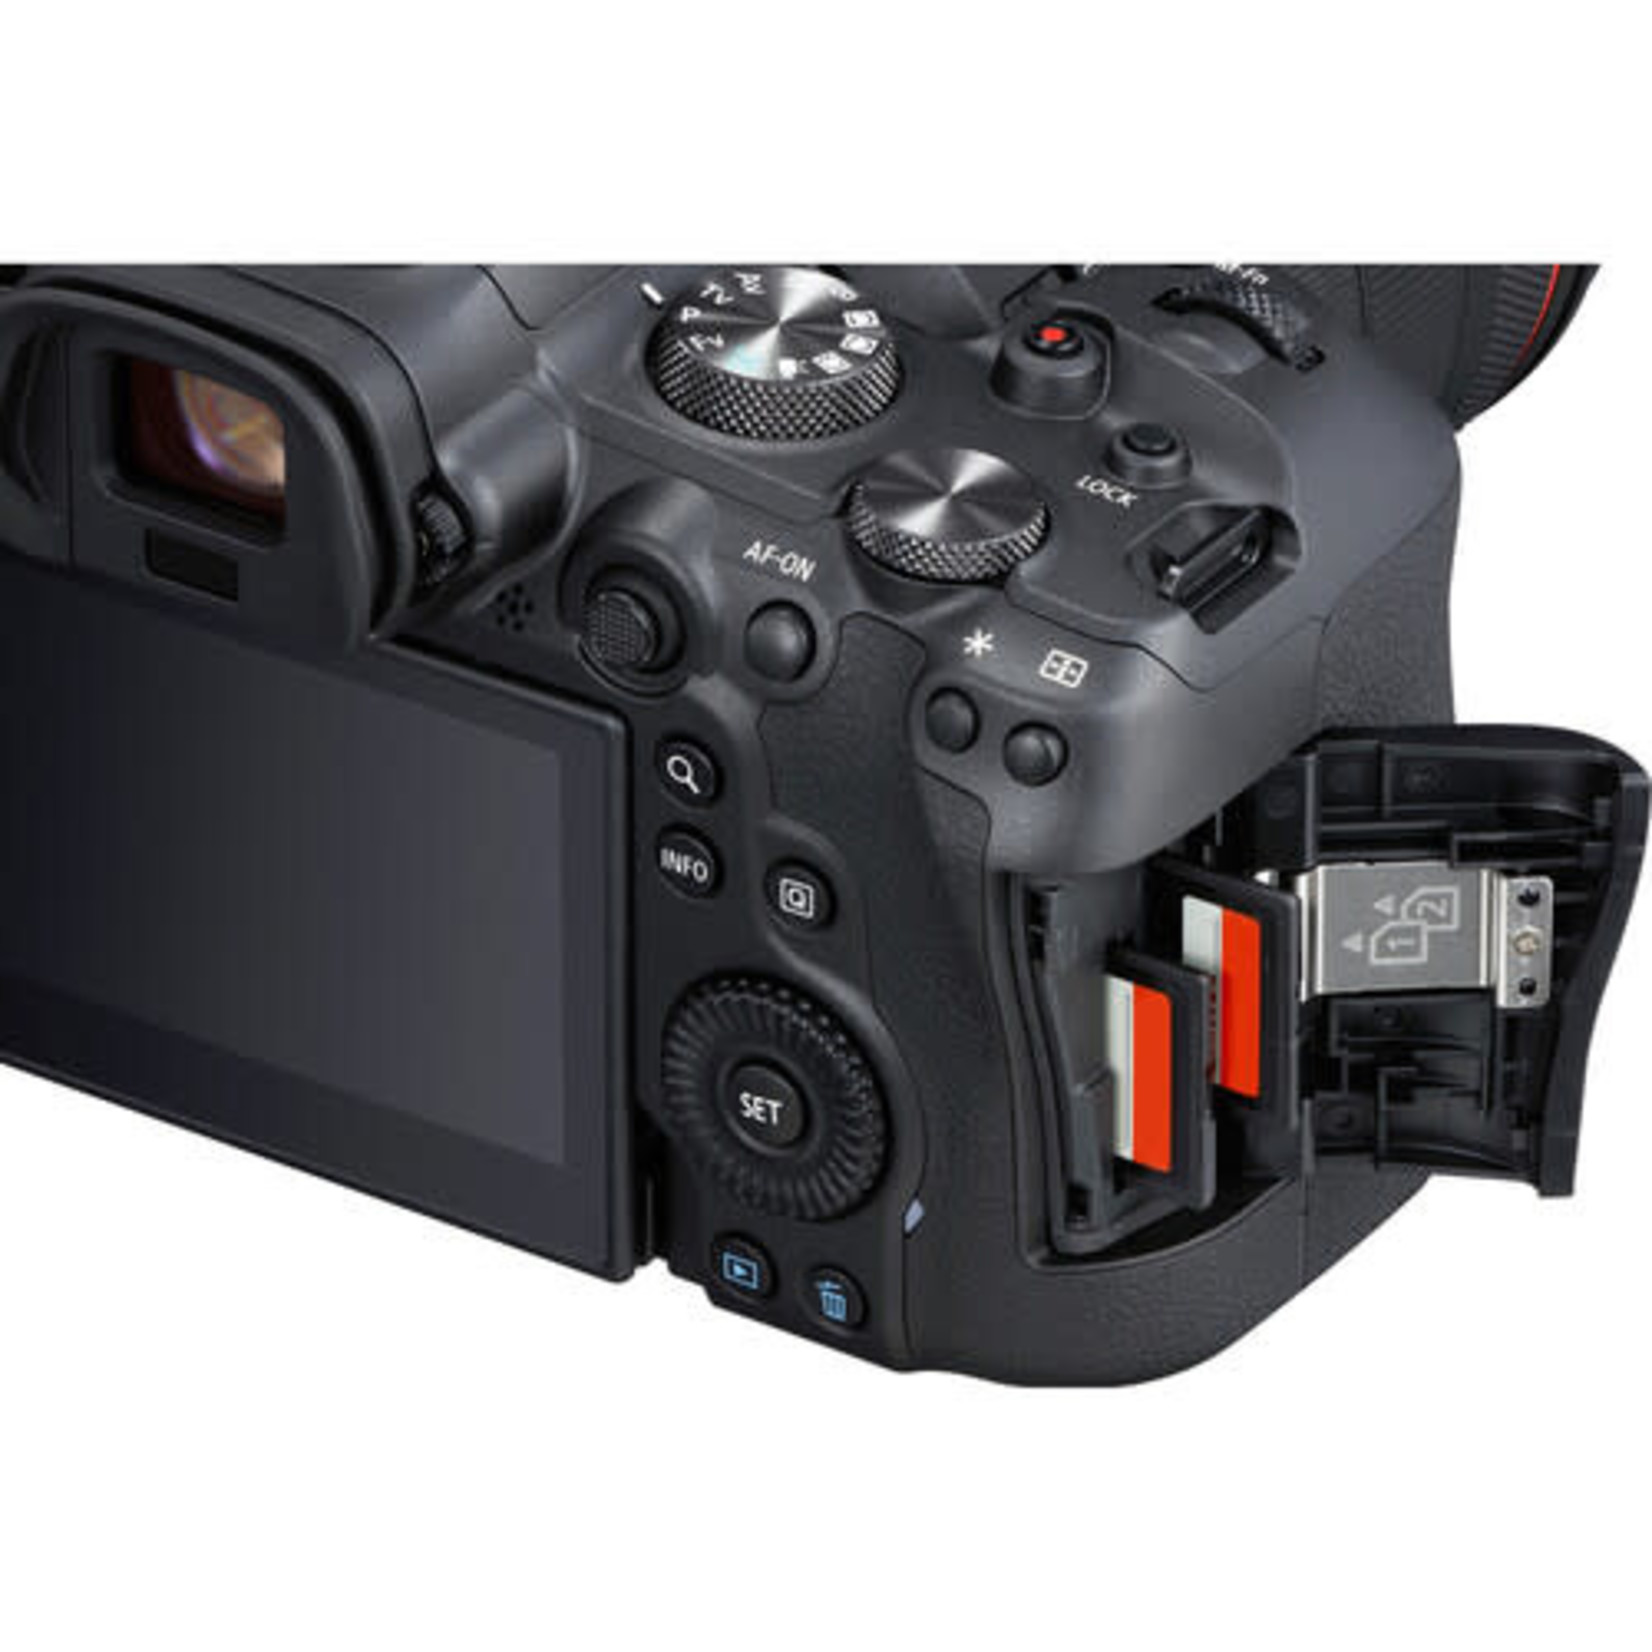 Canon Canon EOS R6 Mirrorless Digital Camera (Body Only)